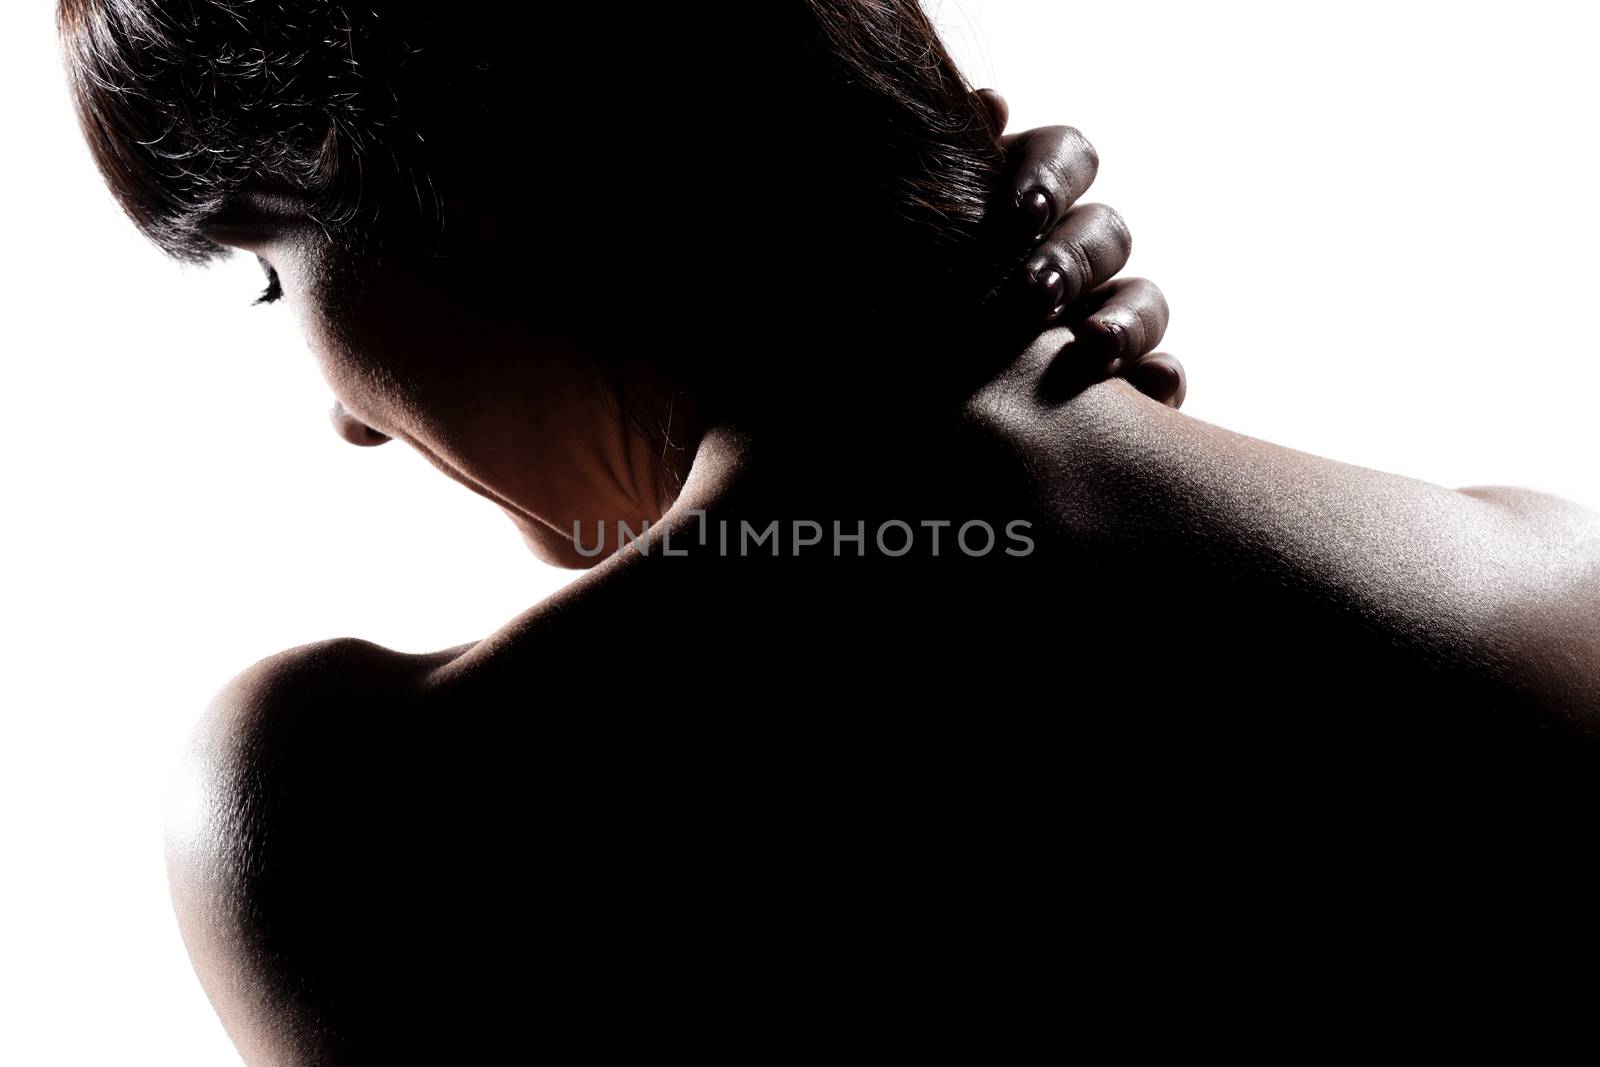 silhouette portrait of a beautiful caucasian girl